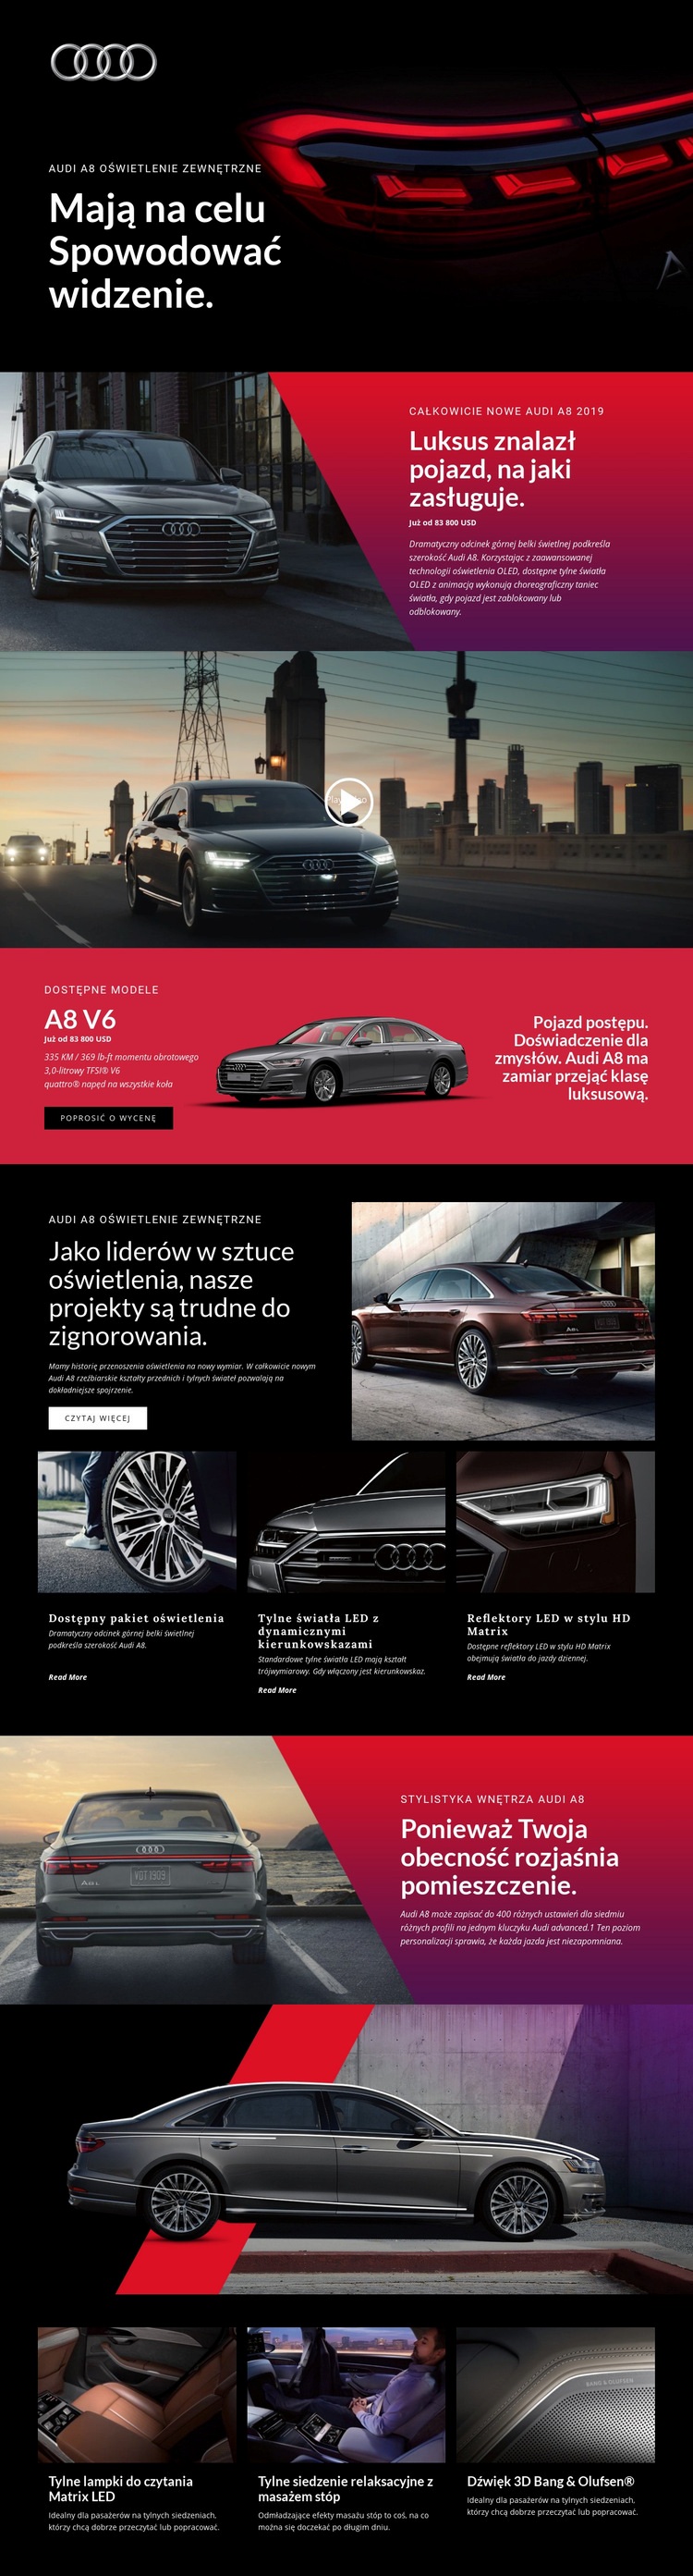 Luksusowe samochody Audi Szablon HTML5